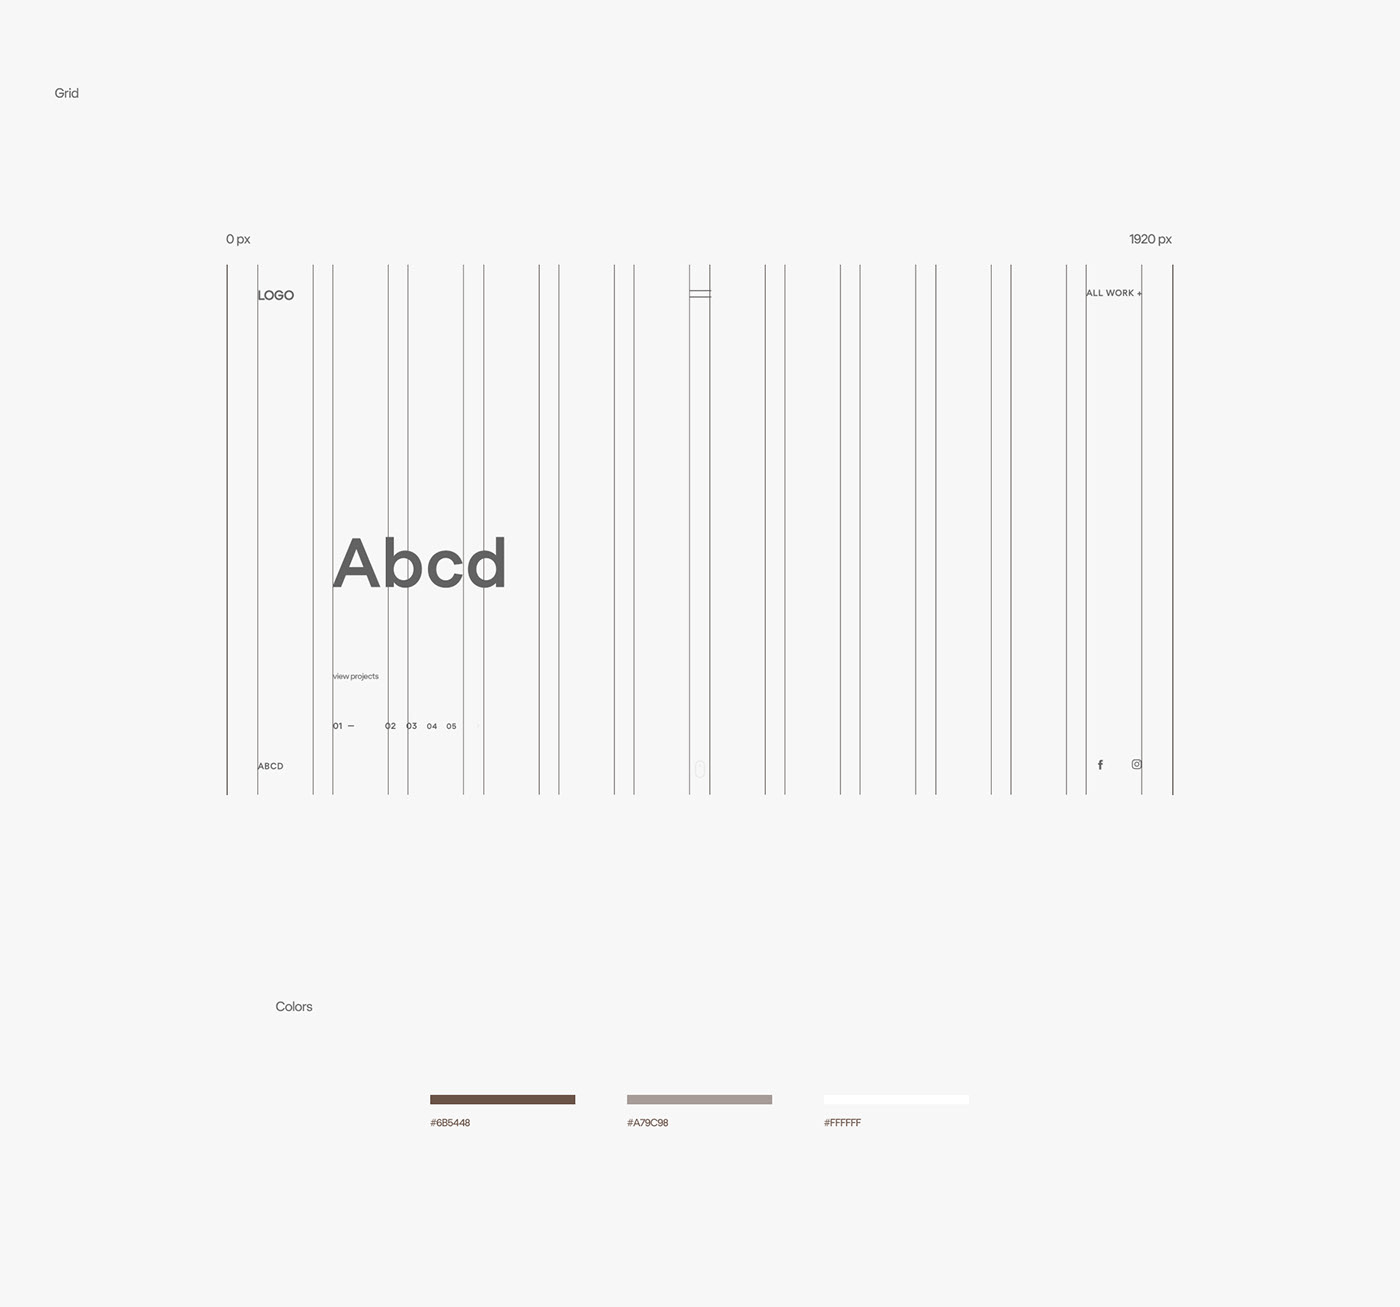 UI ux clean minimal architect architecture studio Webdesign fullscreen Layout